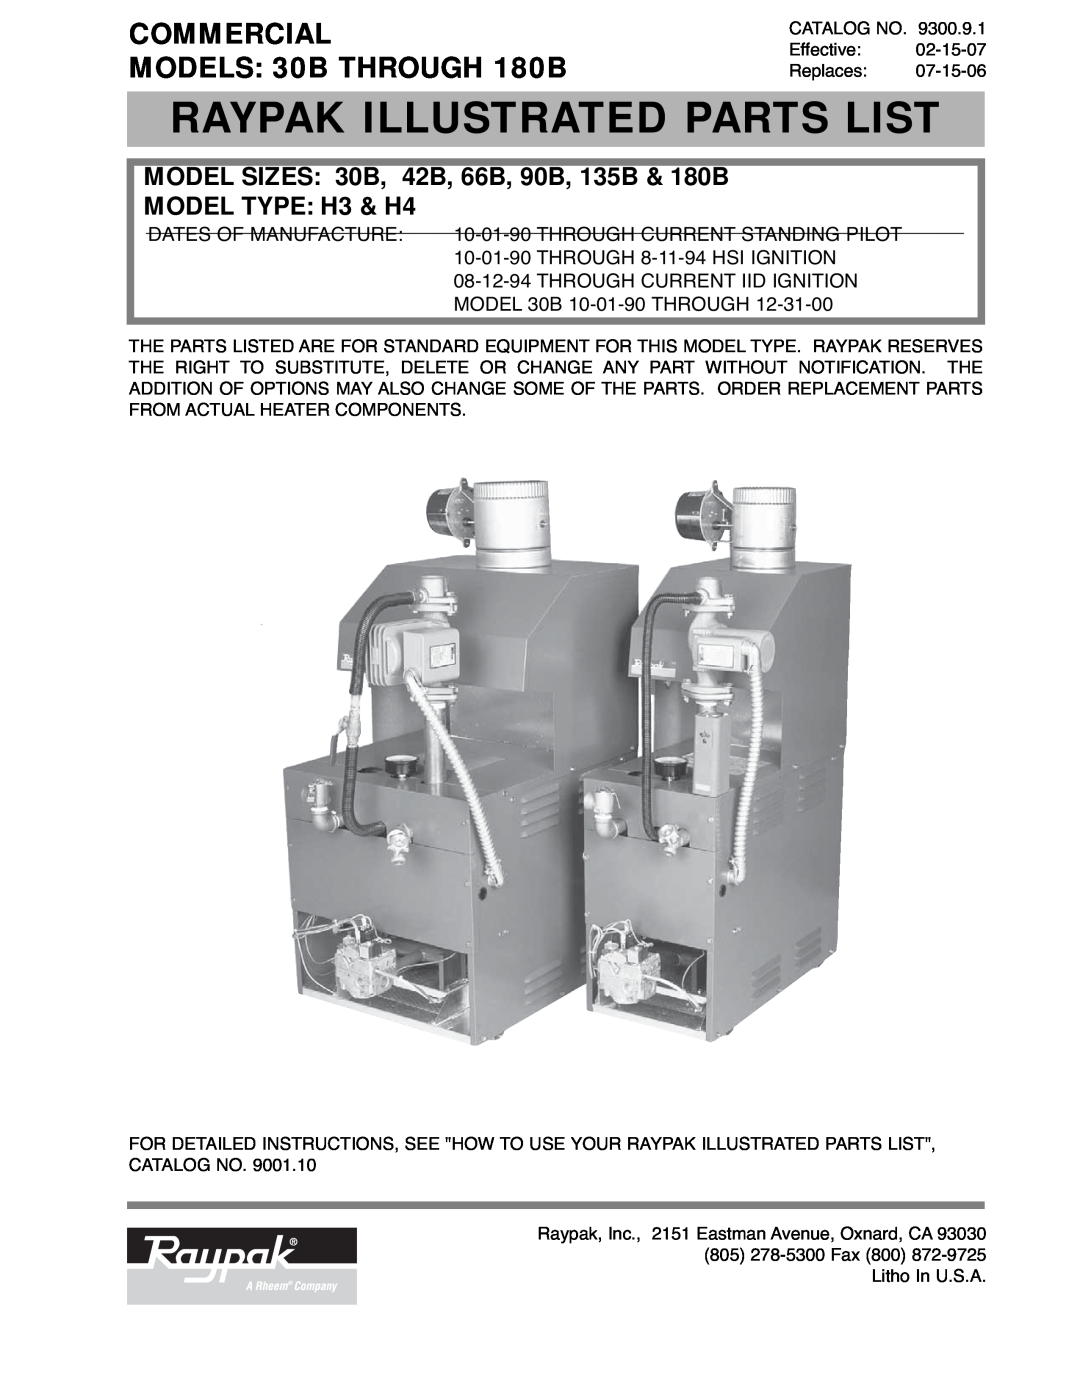 Raypak manual MODEL SIZES 30B, 42B, 66B, 90B, 135B & 180B, MODEL TYPE H3 & H4, Raypak Illustrated Parts List 